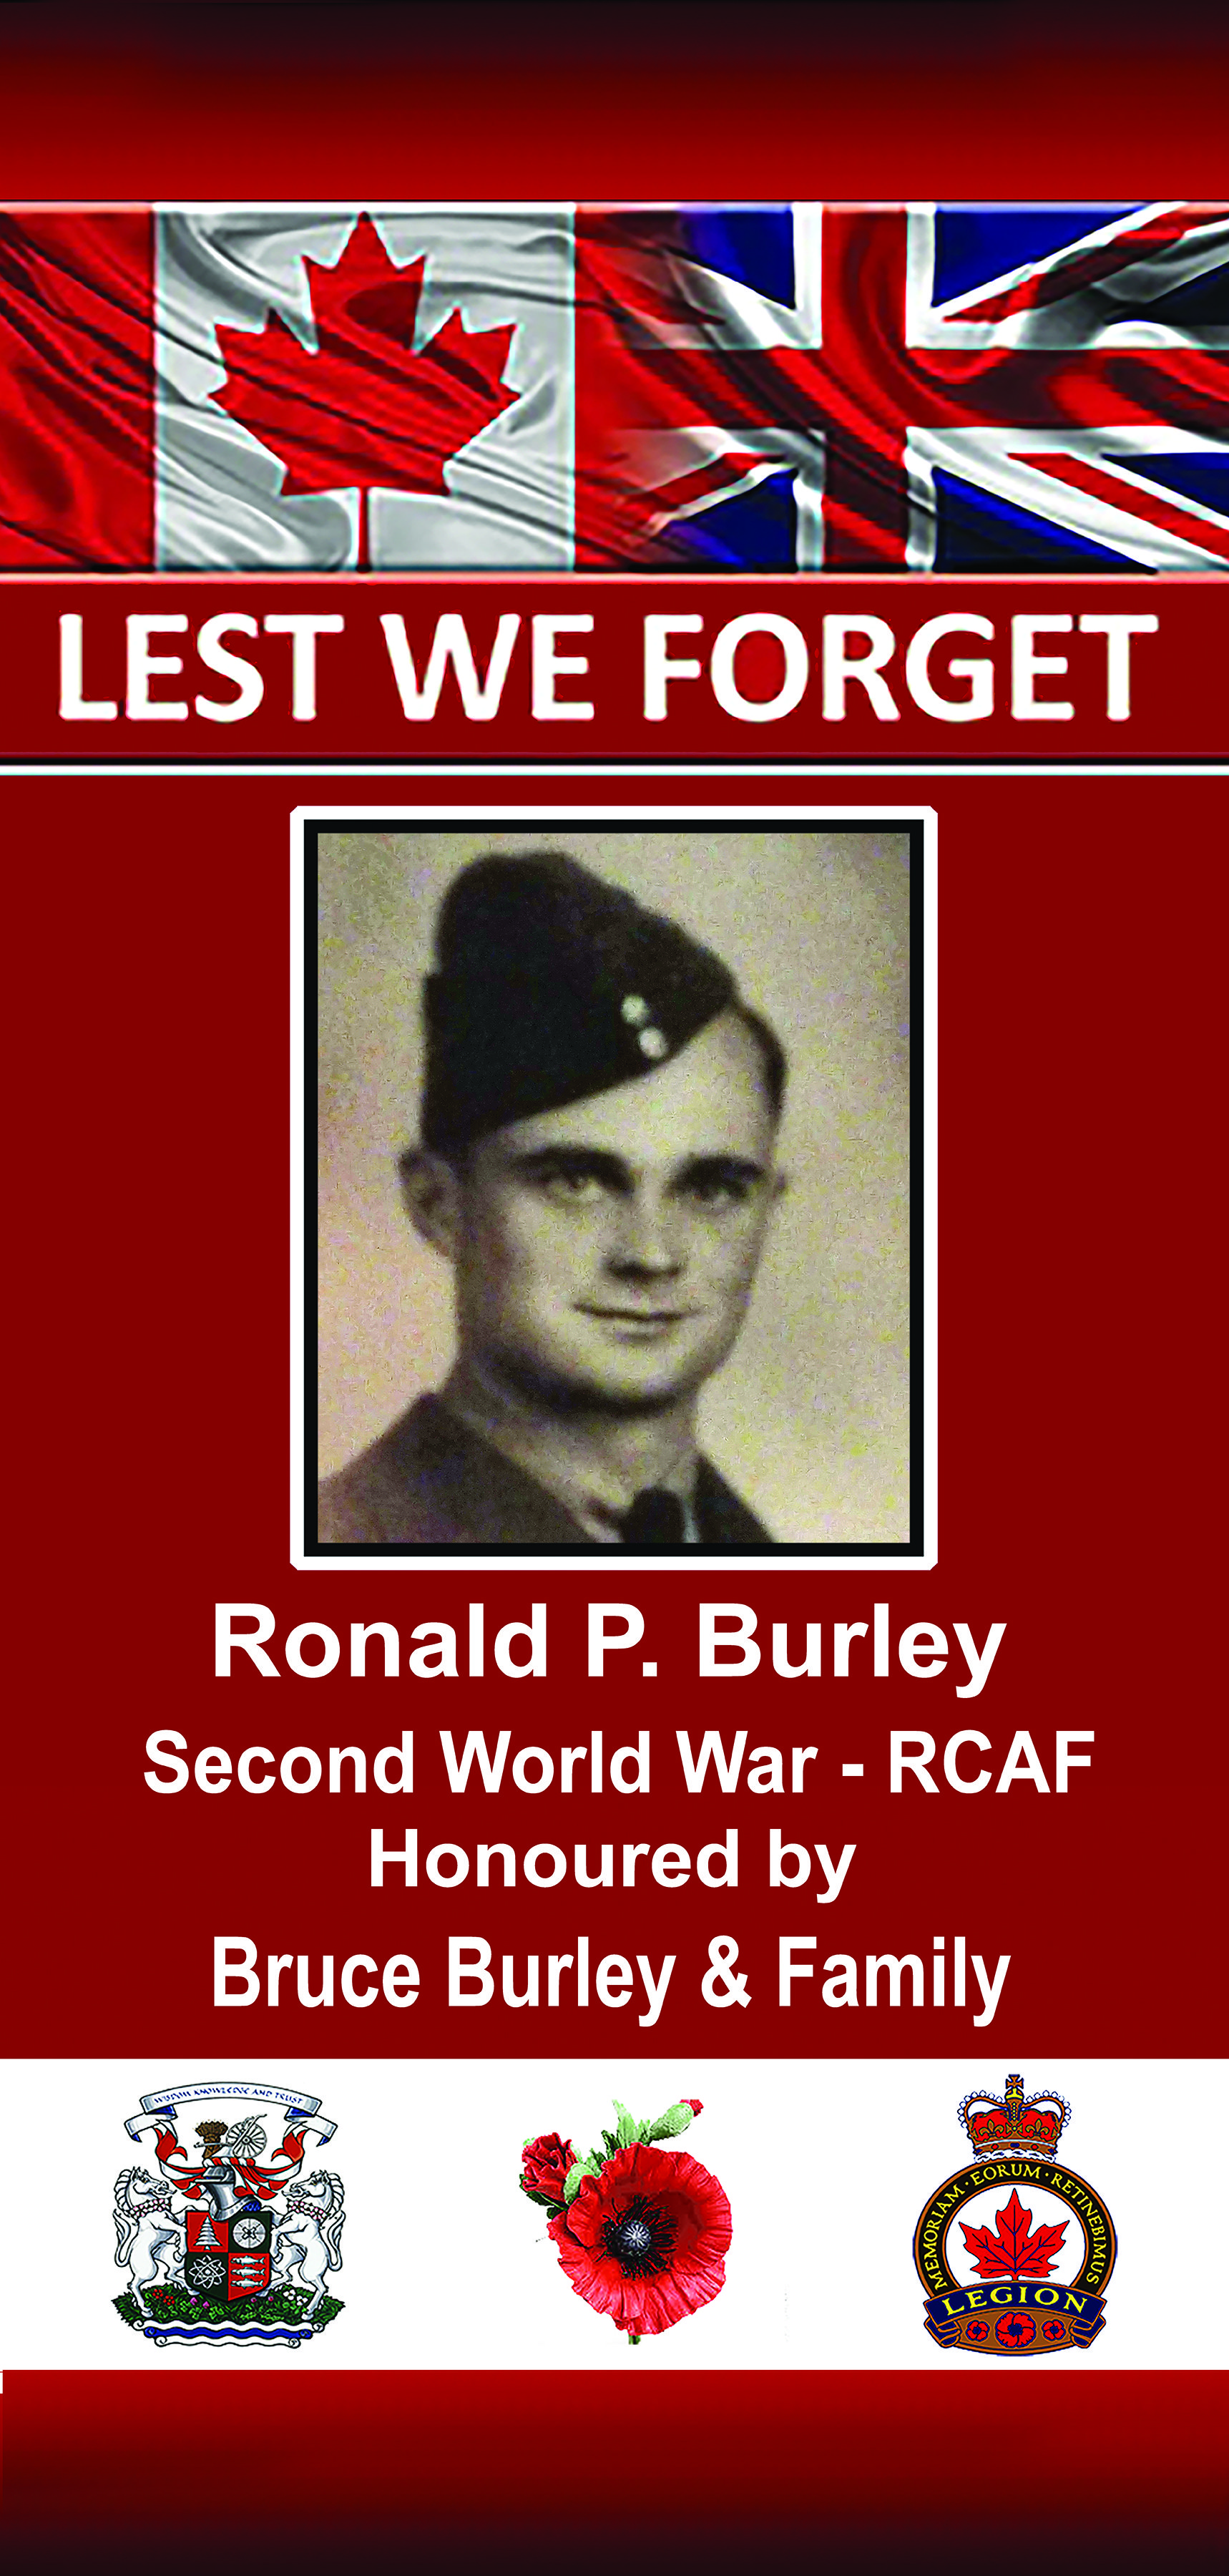 Ronald Percy Burley